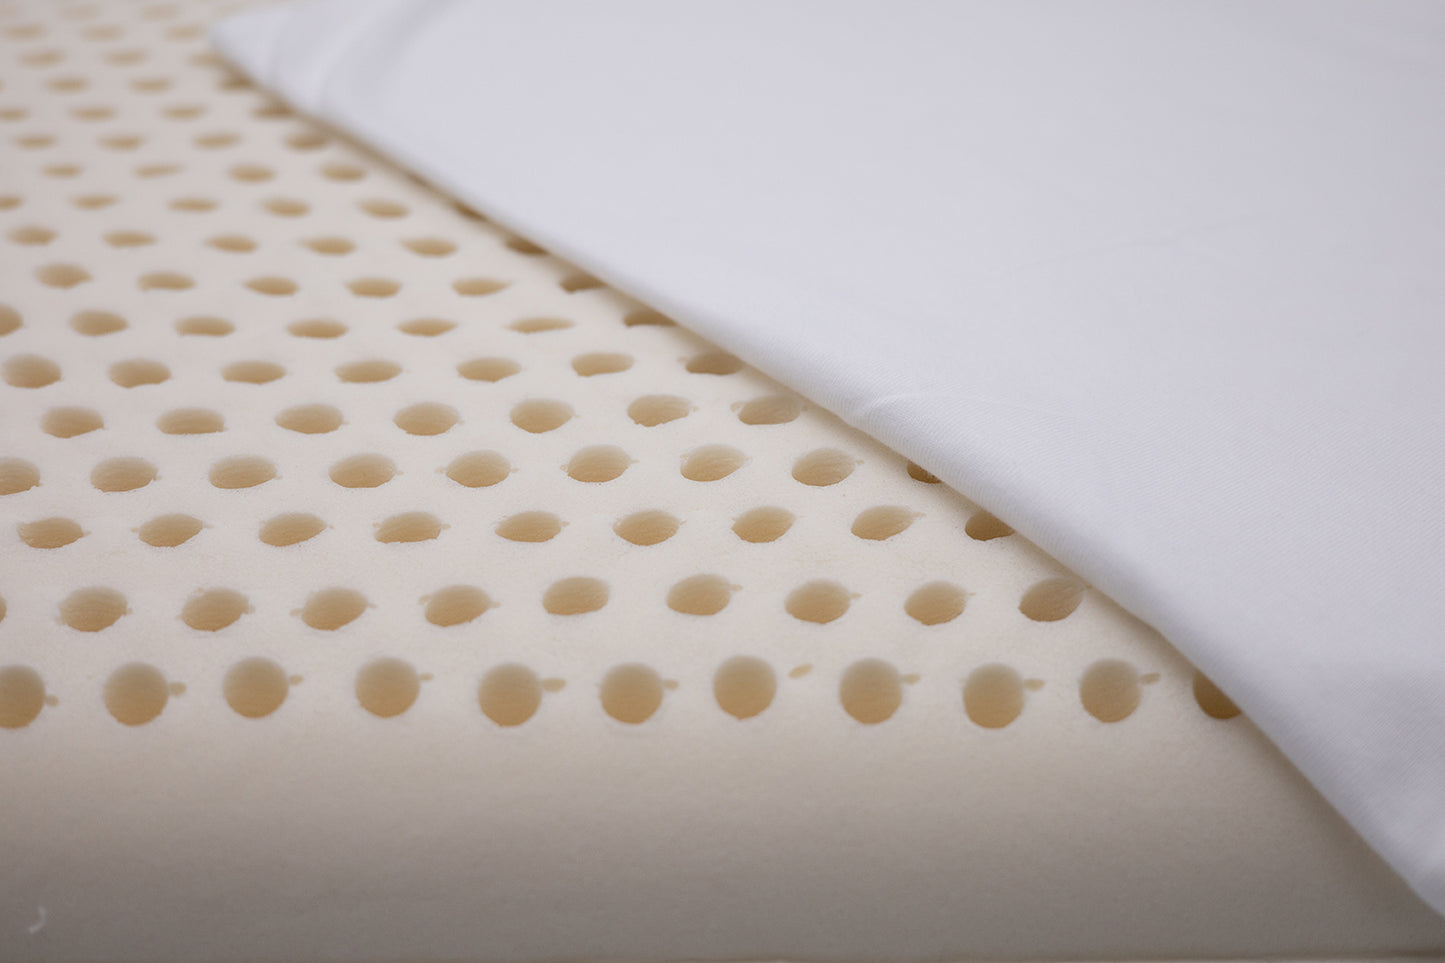 100% Organic Latex Pillow with Premium Organic Cotton Cover